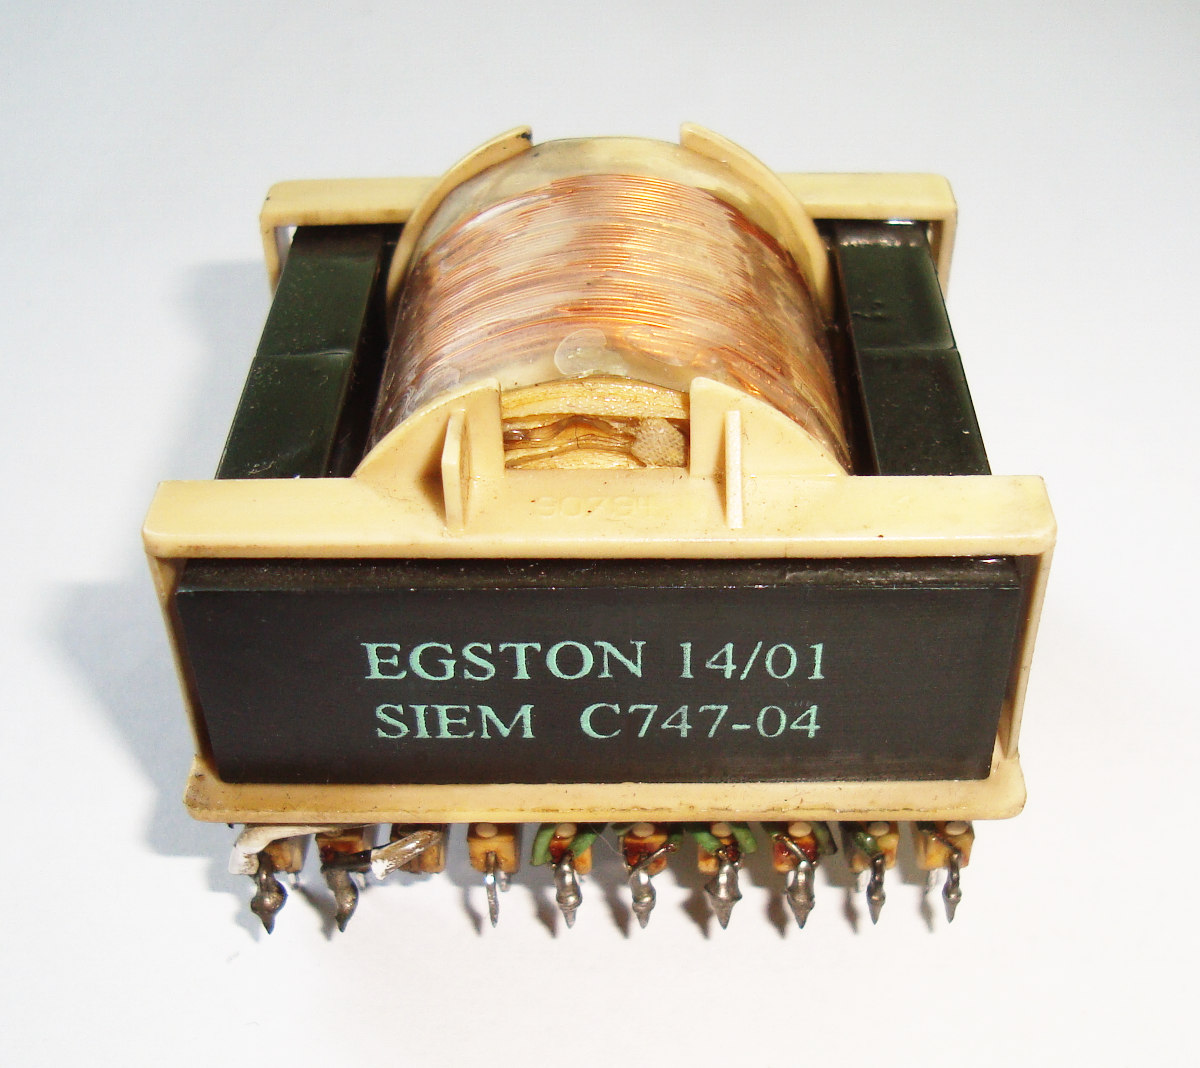 1 Siemens C747-04 Transformator Egston